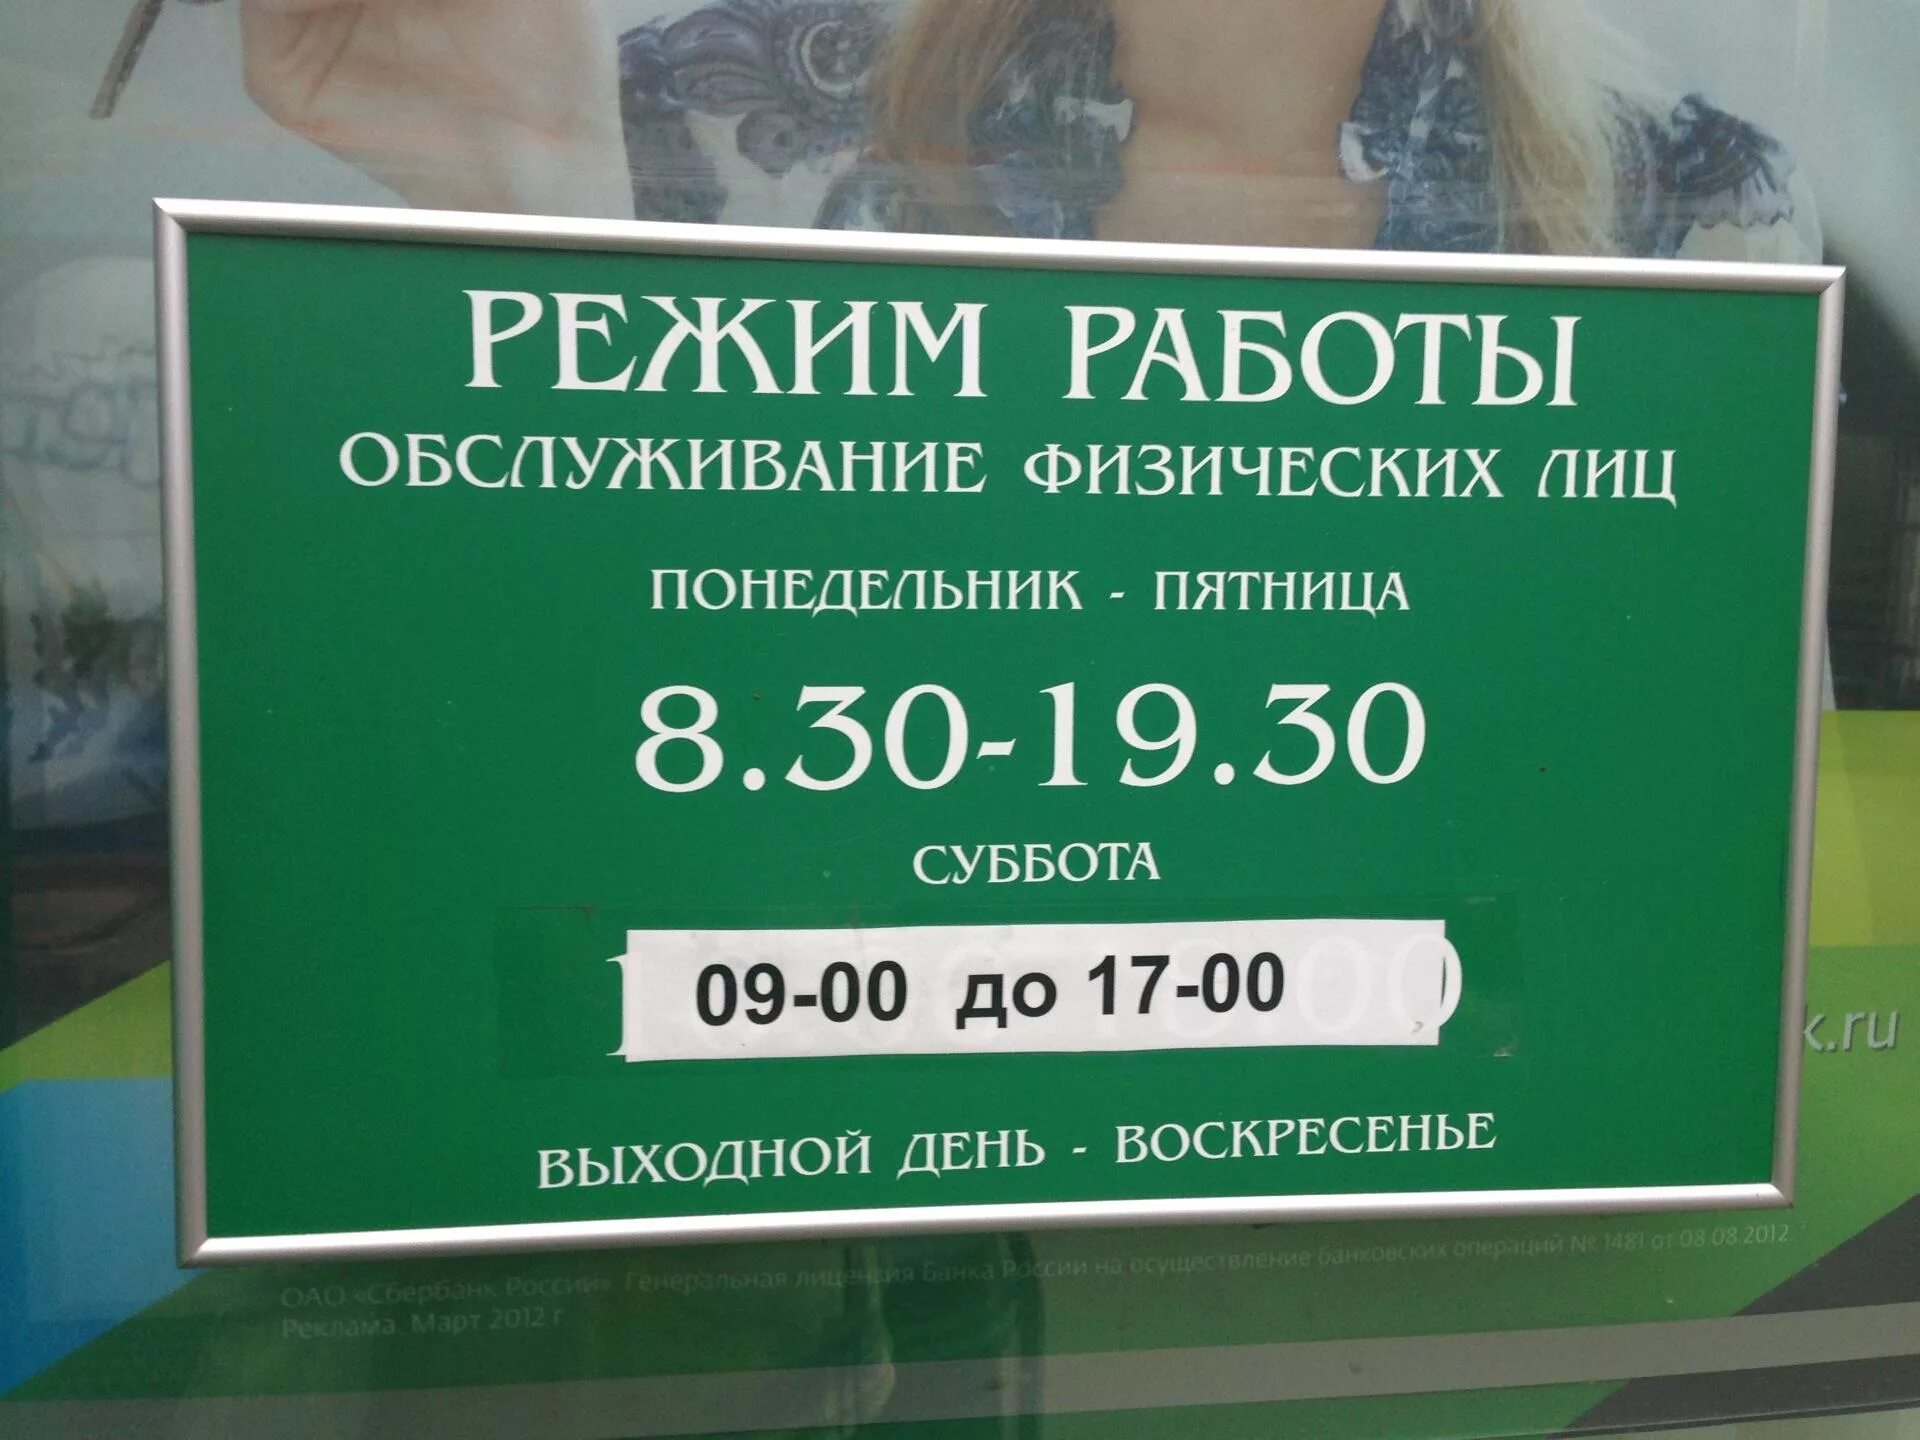 Рабочие дни Сбербанка. График работы Сбербанка в Москве. Сбербанк работает в субботу. Суббота воскресенье Сбербанк работает.